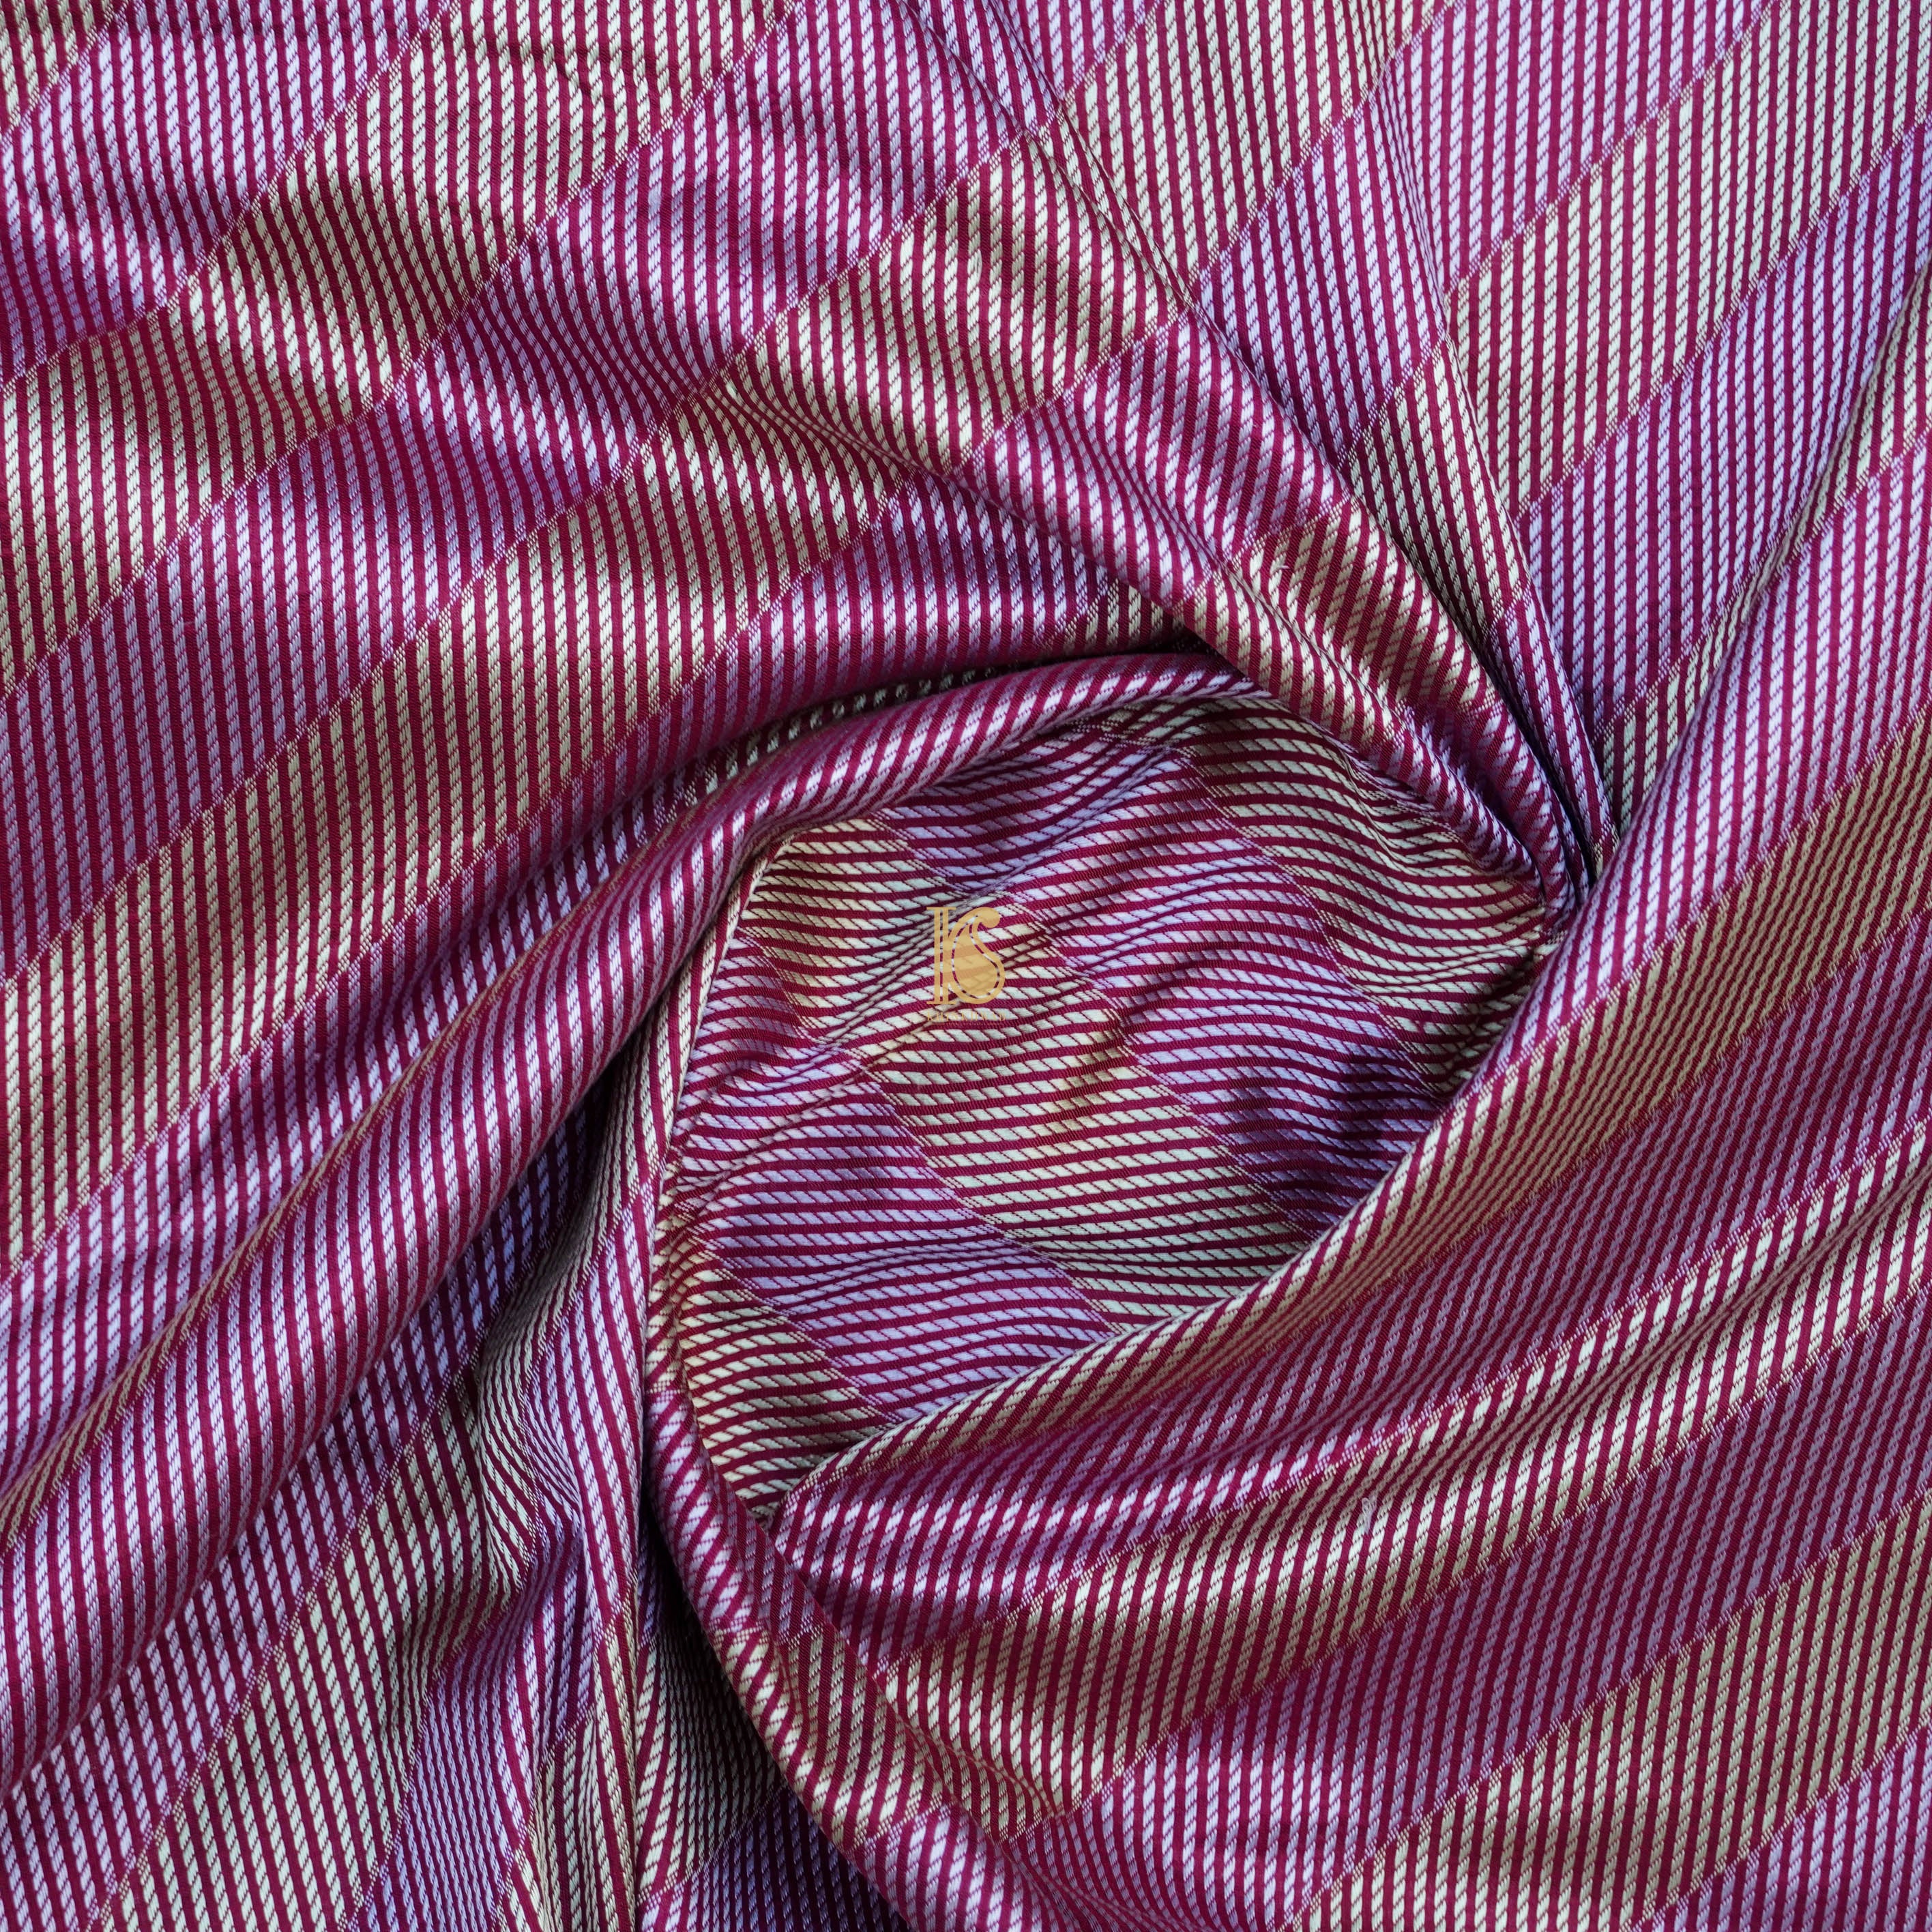 Handloom Banarasi Katan Silk Purple Brocade Stripes Saree - Khinkhwab